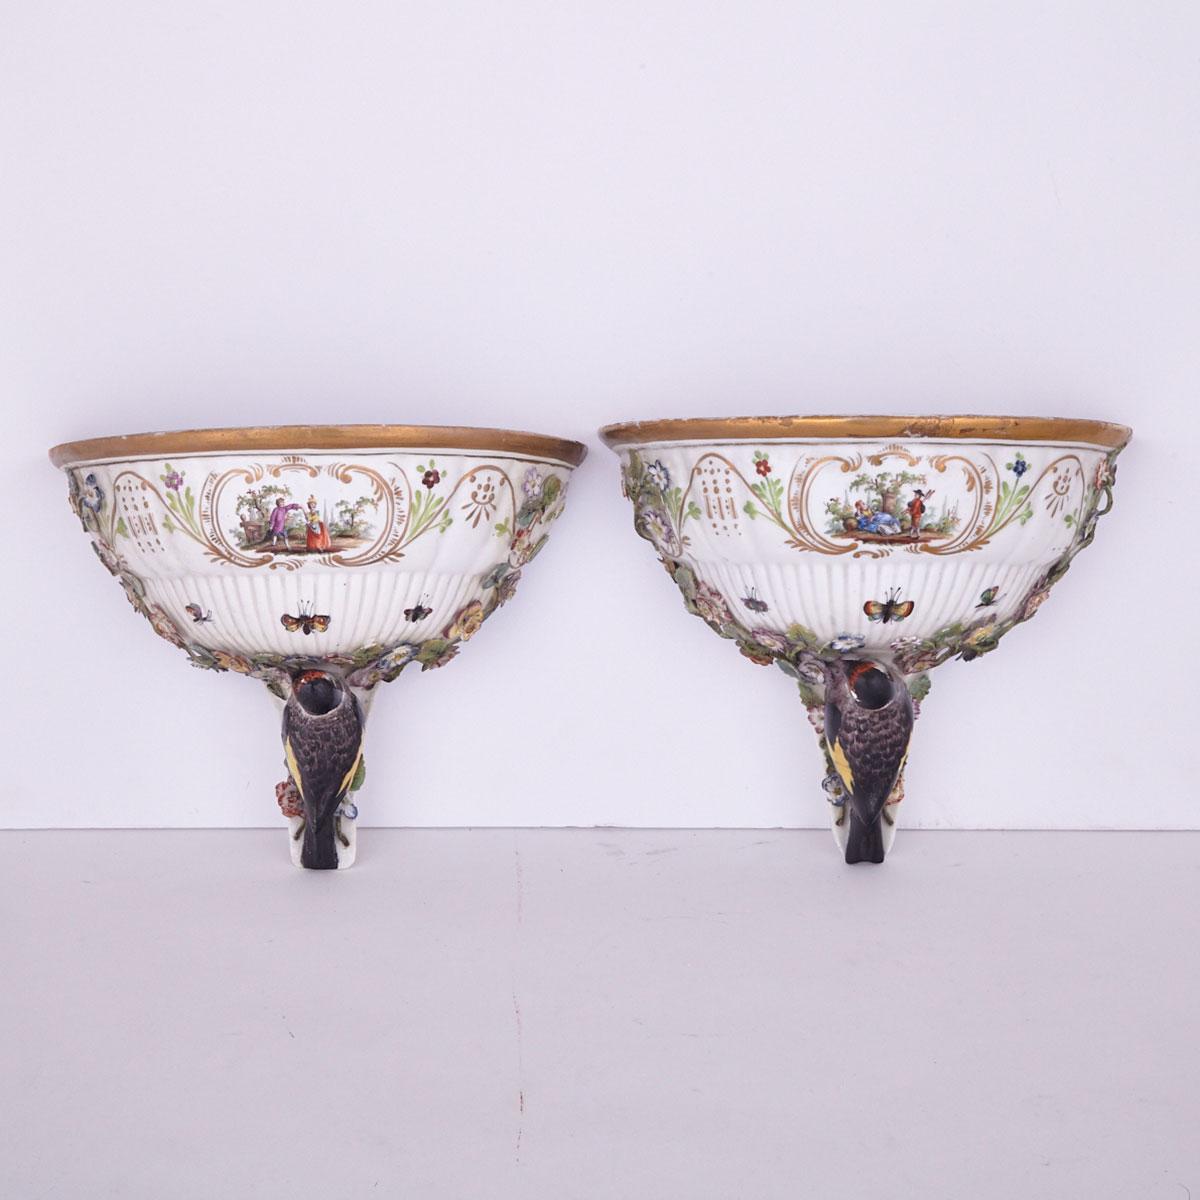 Pair of German Porcelain Wall Brackets, 19th century